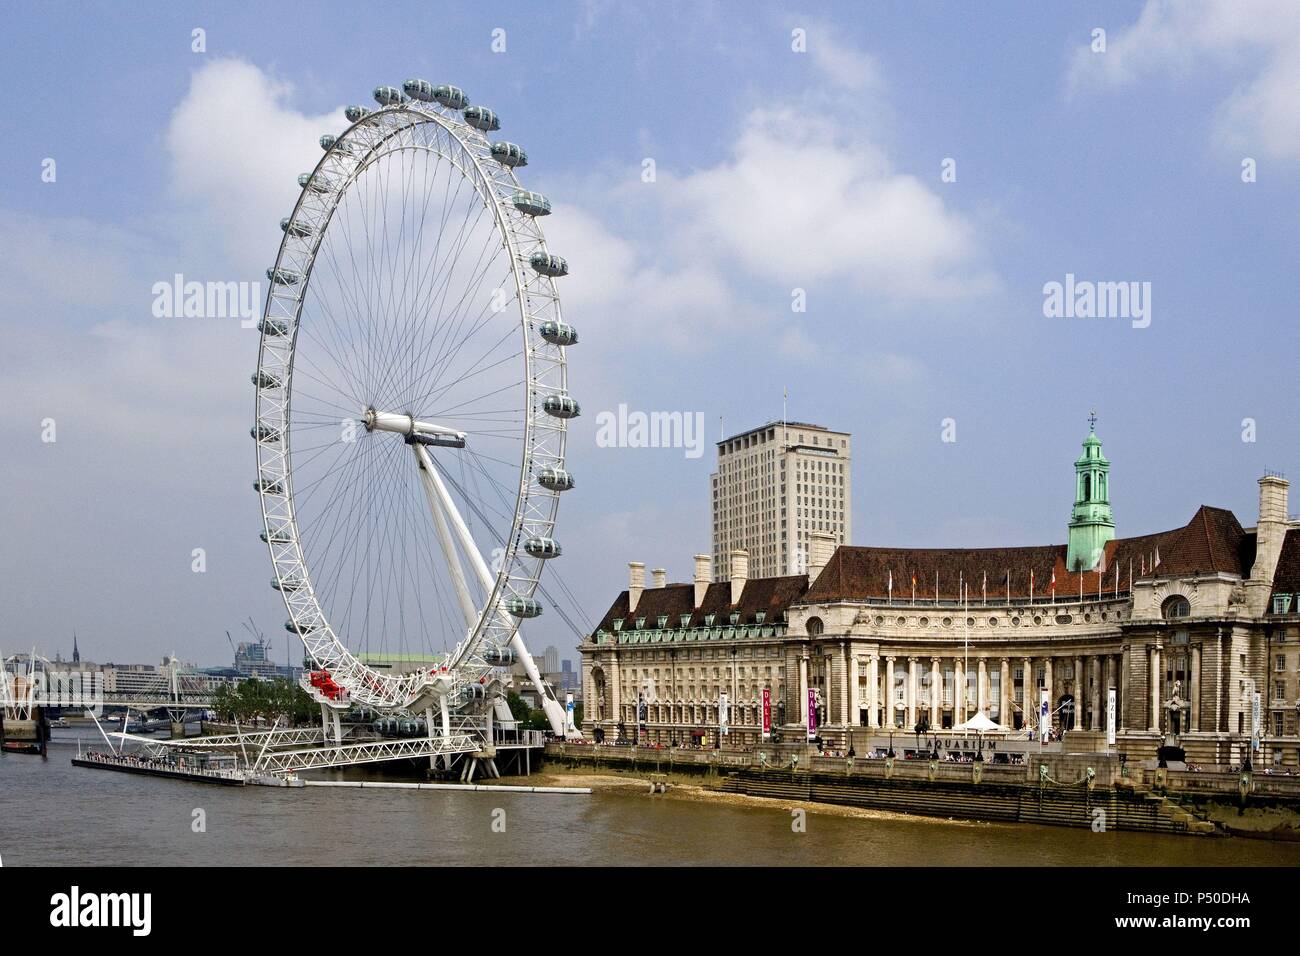 Reino Unido Londres Vista De La Noria Del Milenio London Eye A Orillas Del Rio Tamesis Inglaterra Stockfotografie Alamy